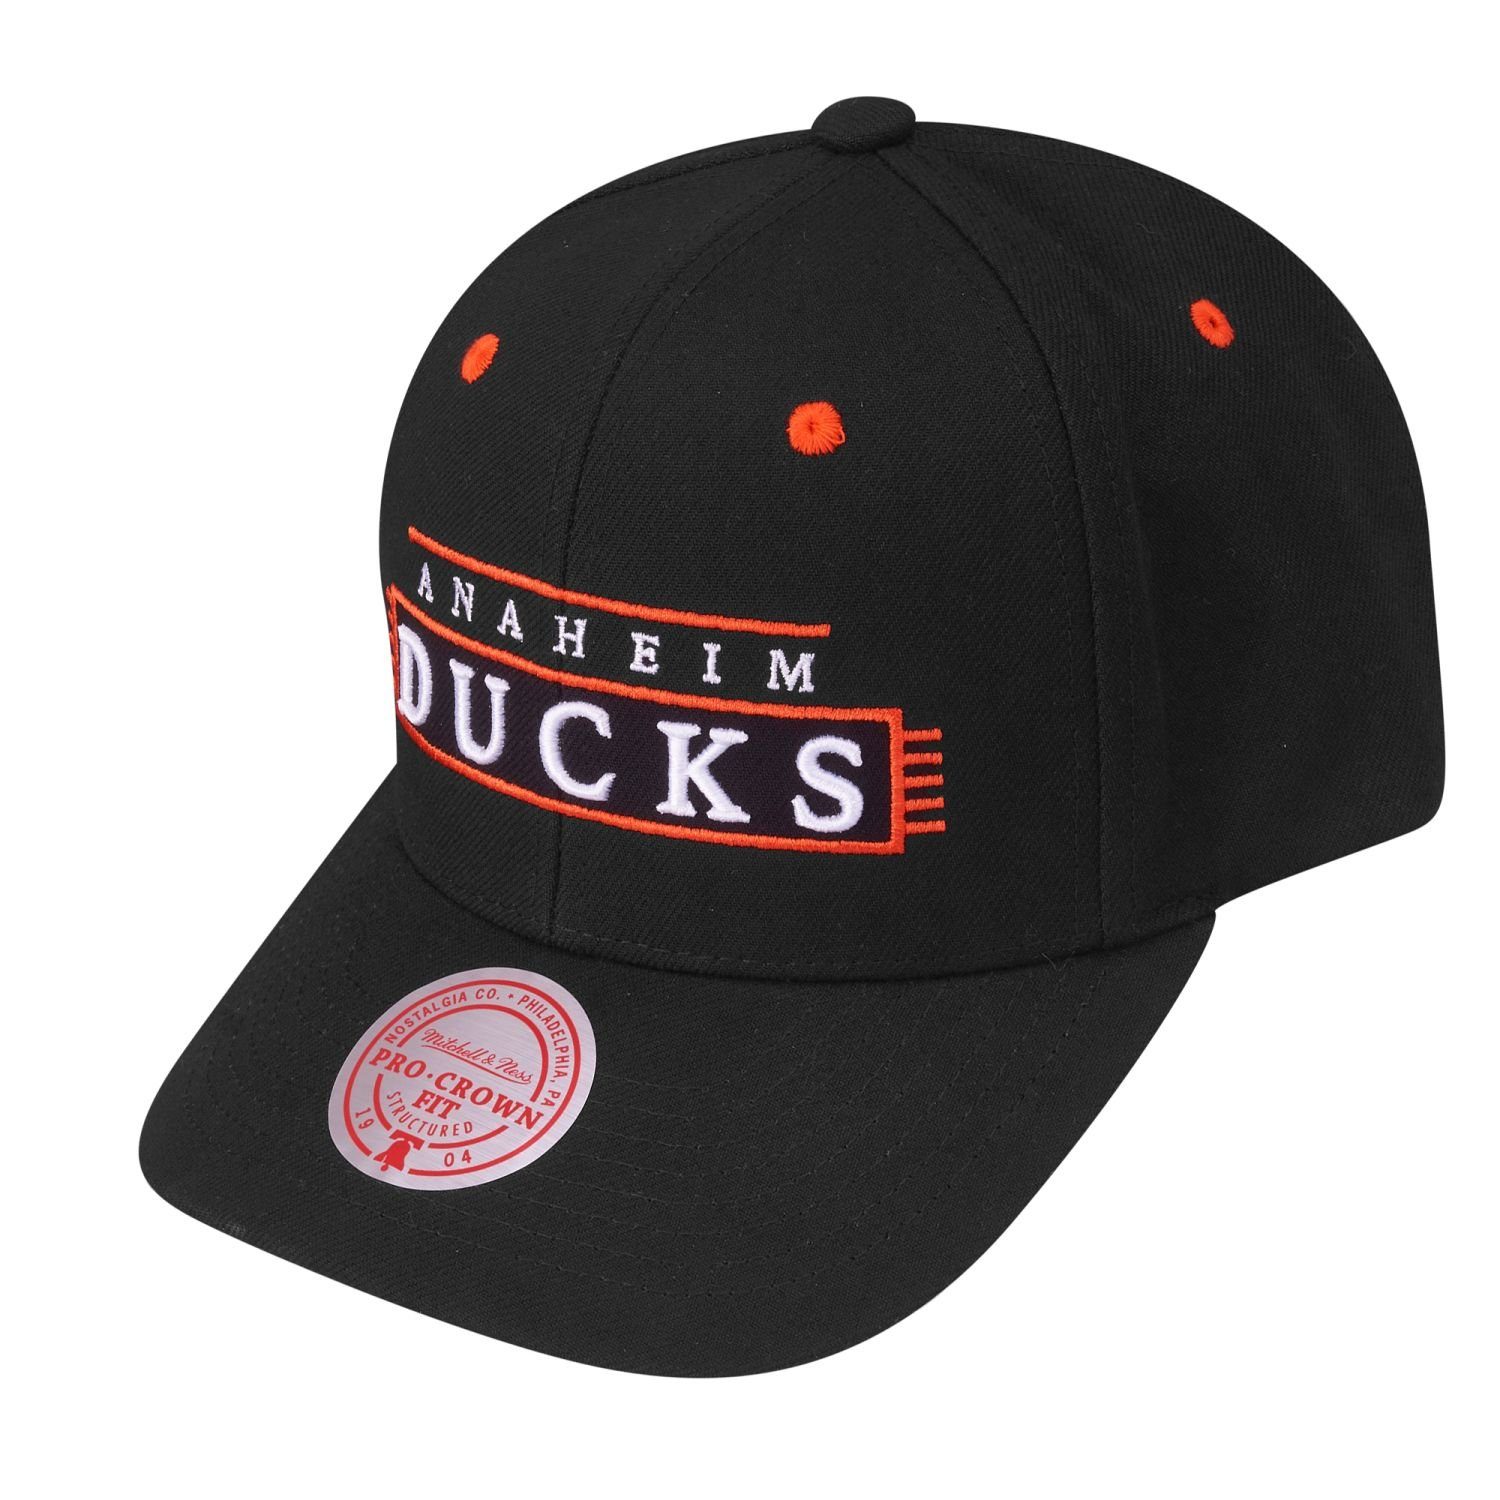 PRO Mitchell Snapback Ducks & Anaheim Ness LOFI Cap